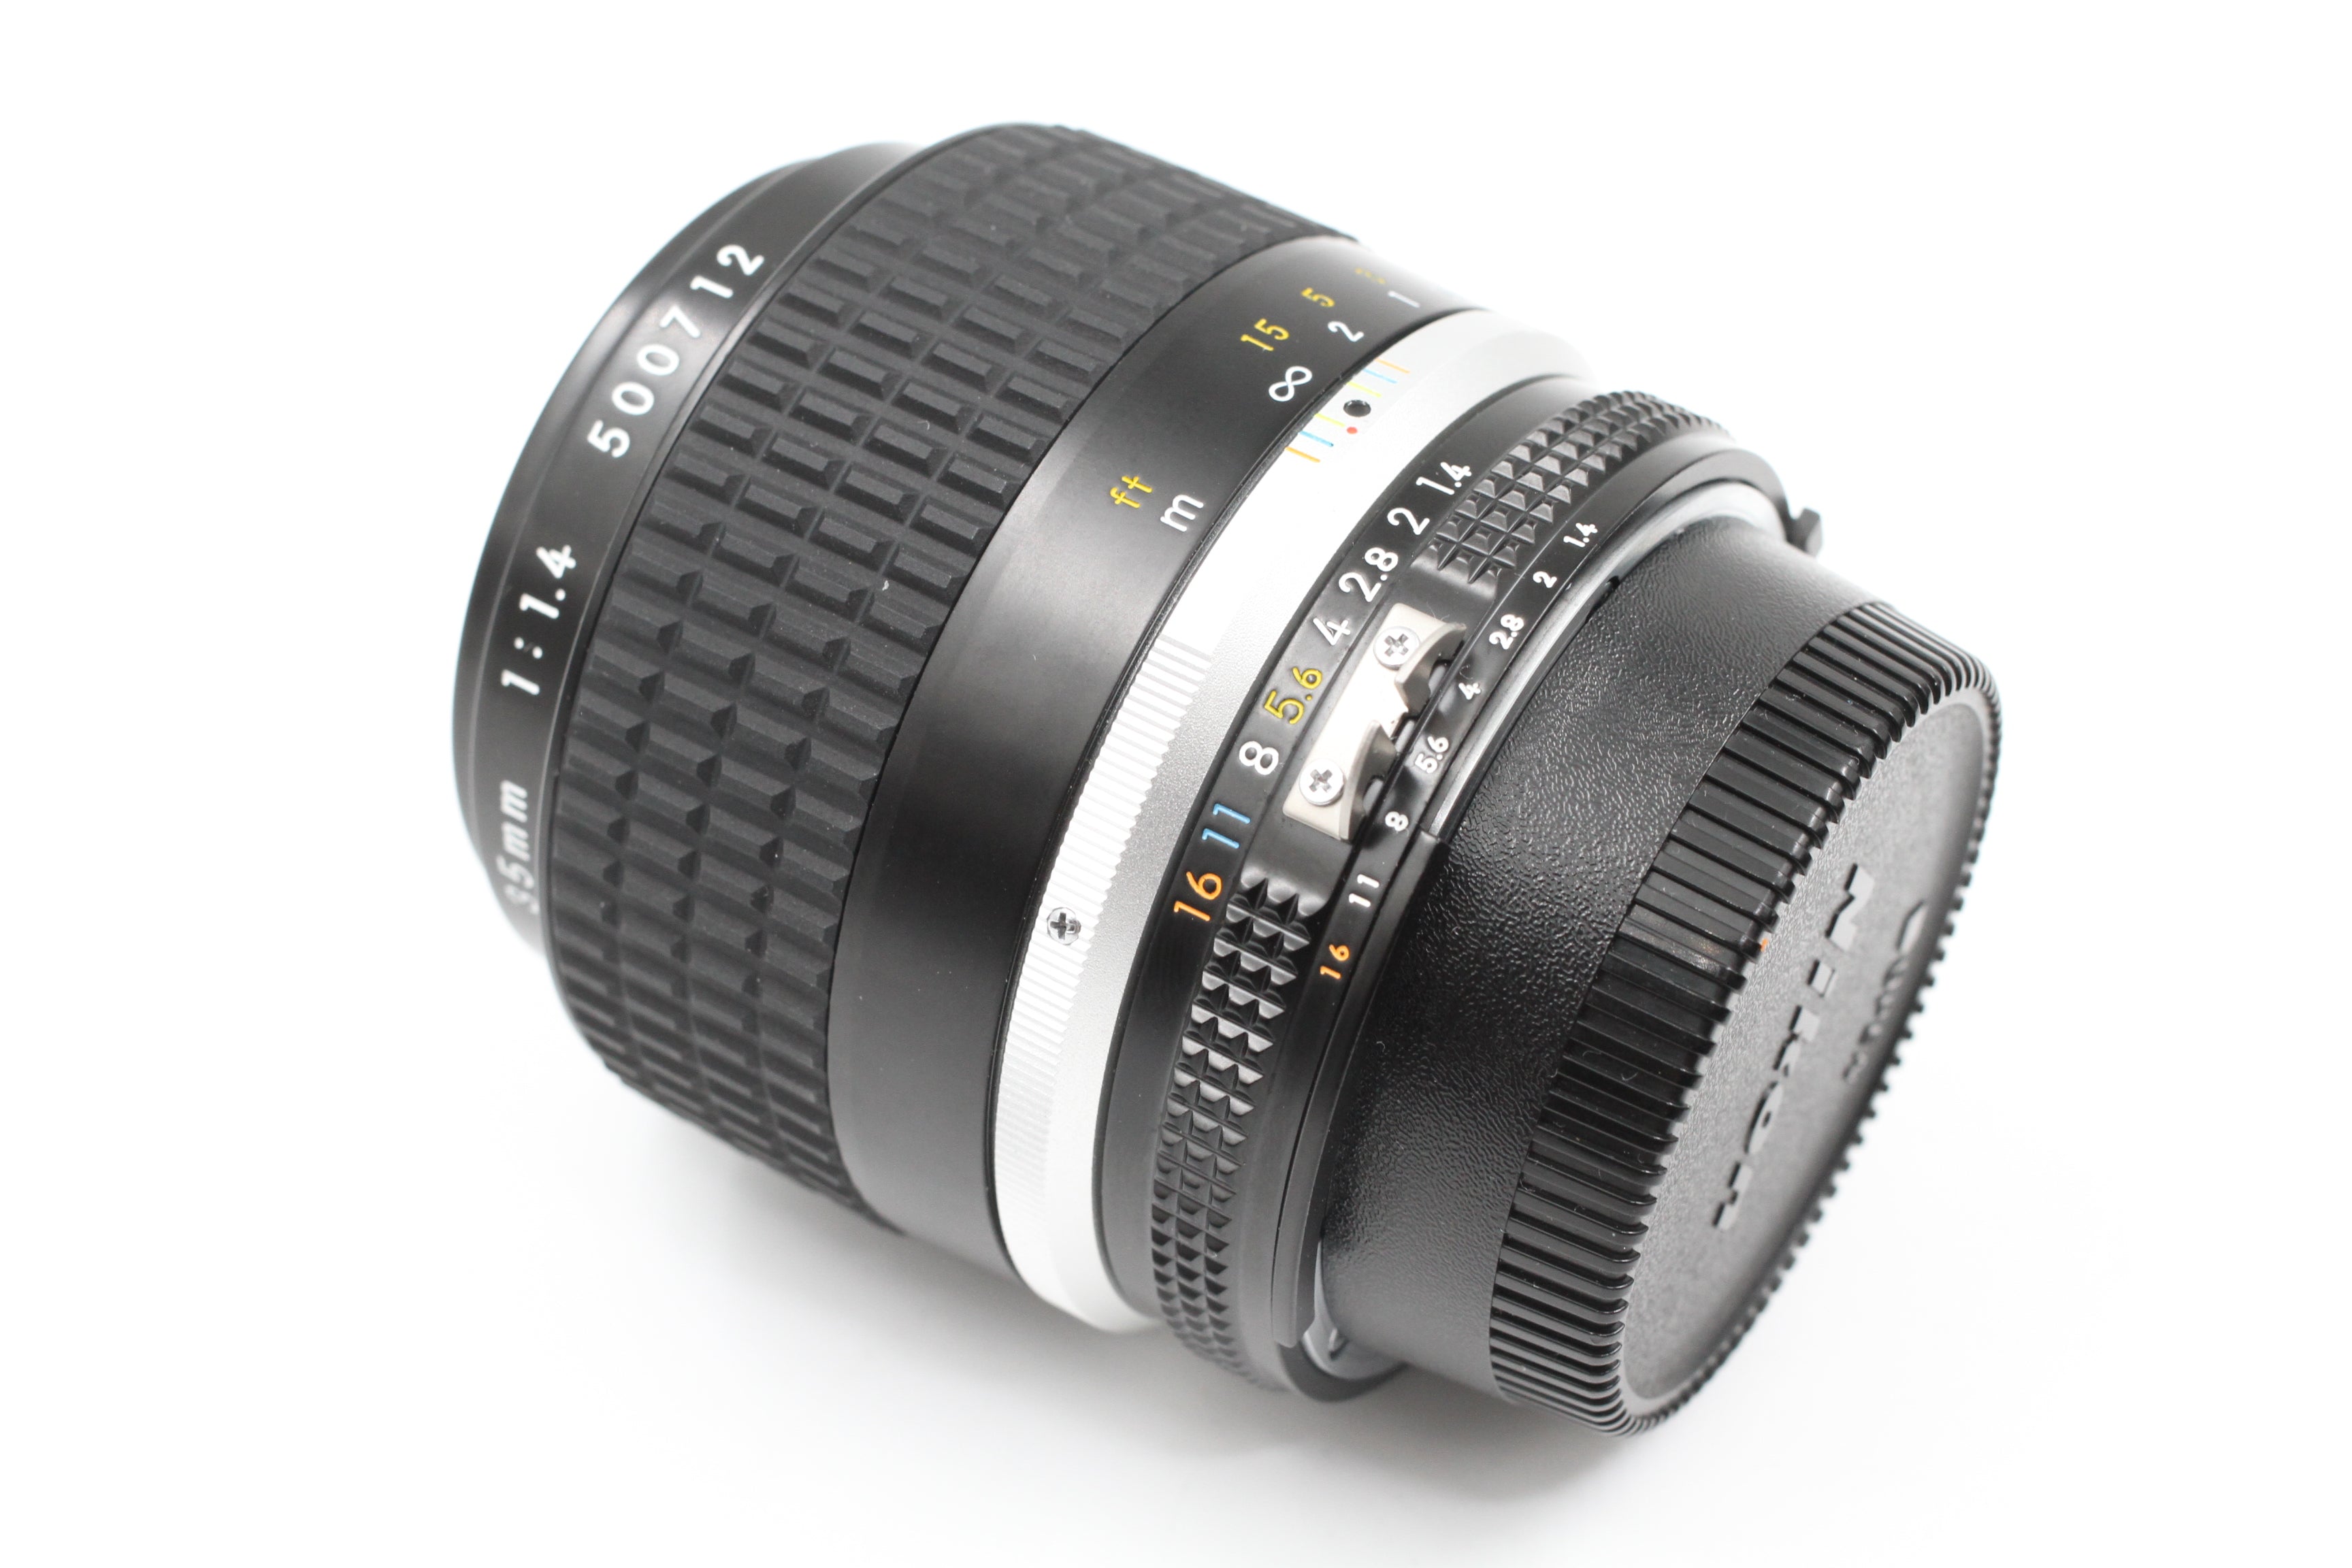 Nikon Nikkor 35mm f1.4 Ais Wide Angle w/ Caps